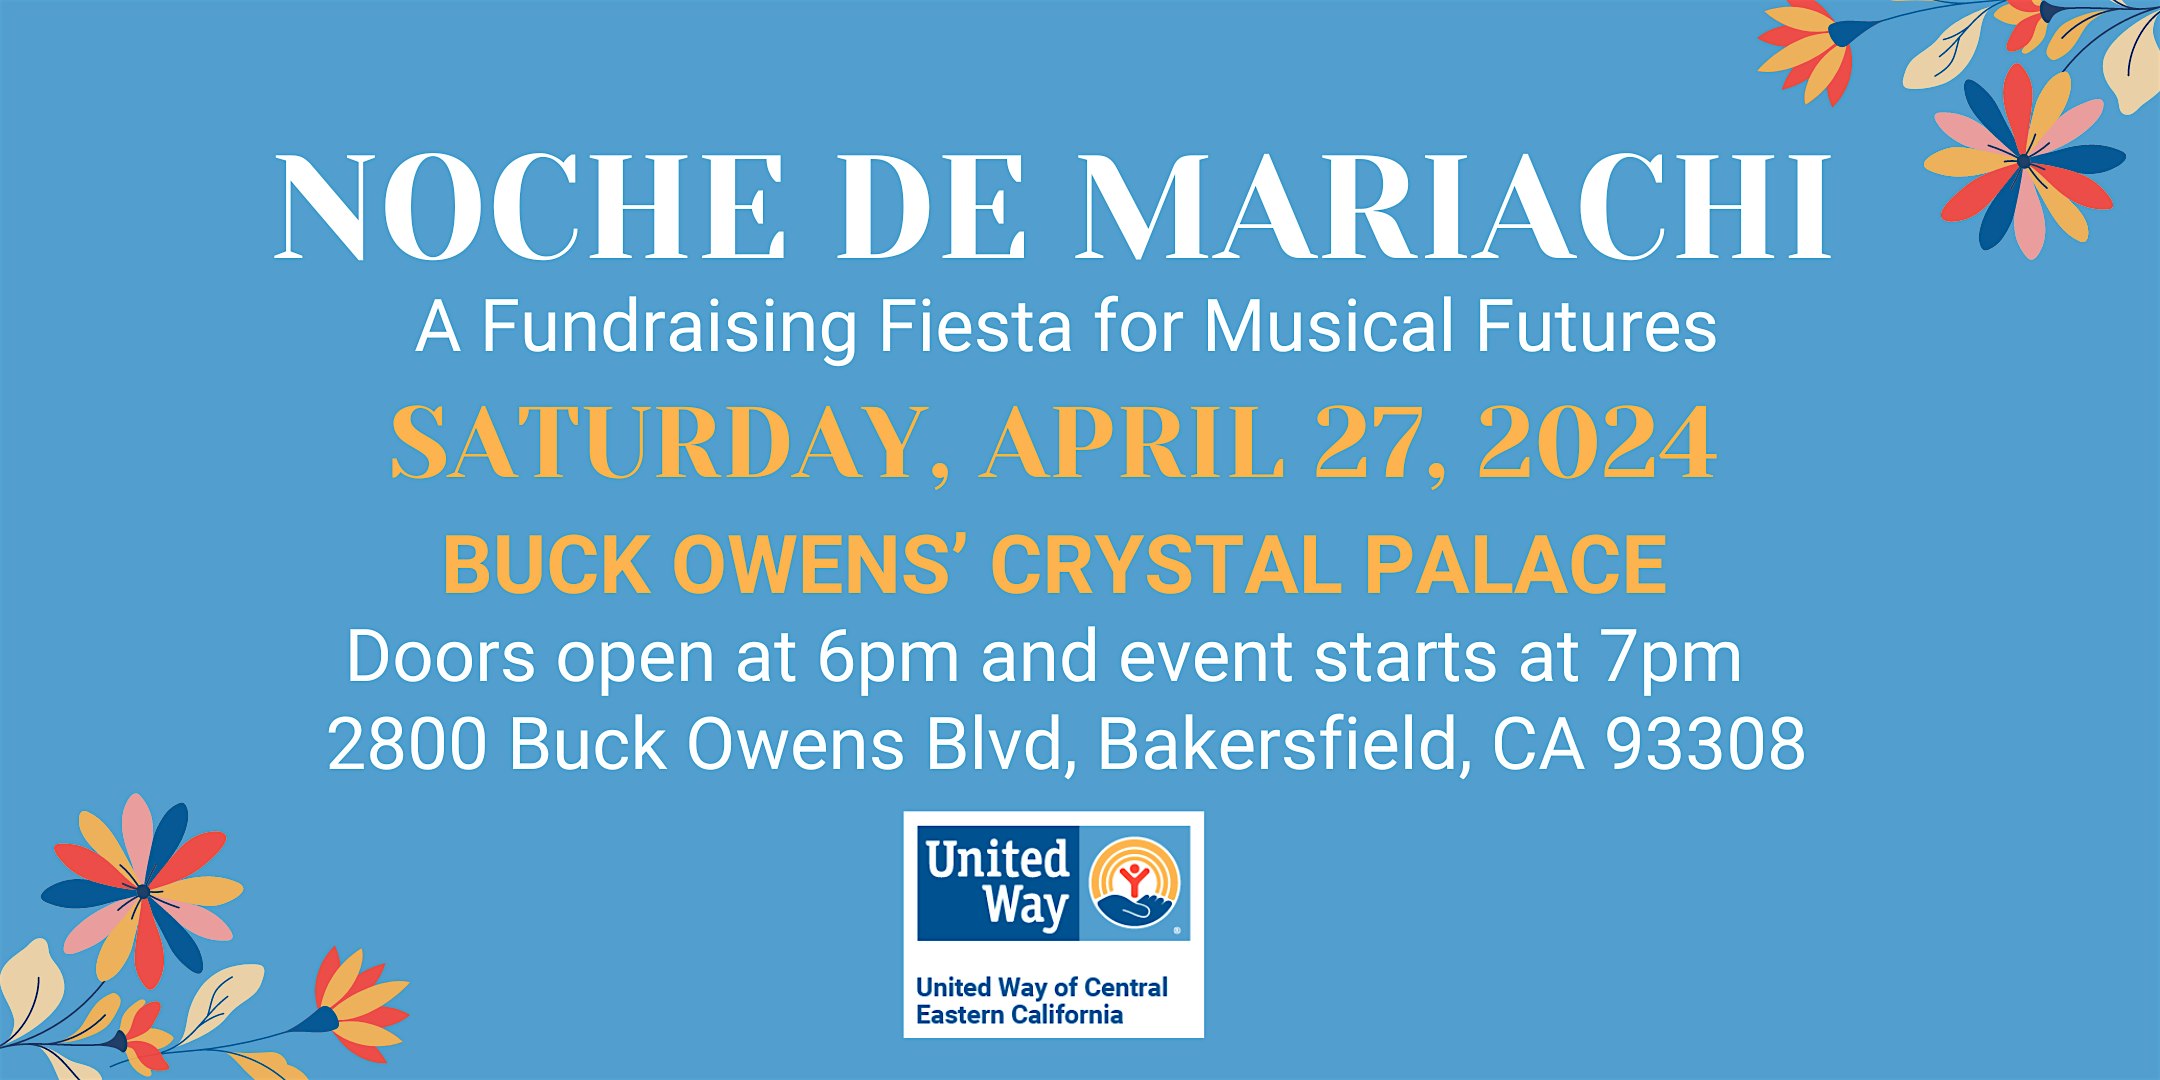 Noche de Mariachi: A Fundraising Fiesta for Musical Futures